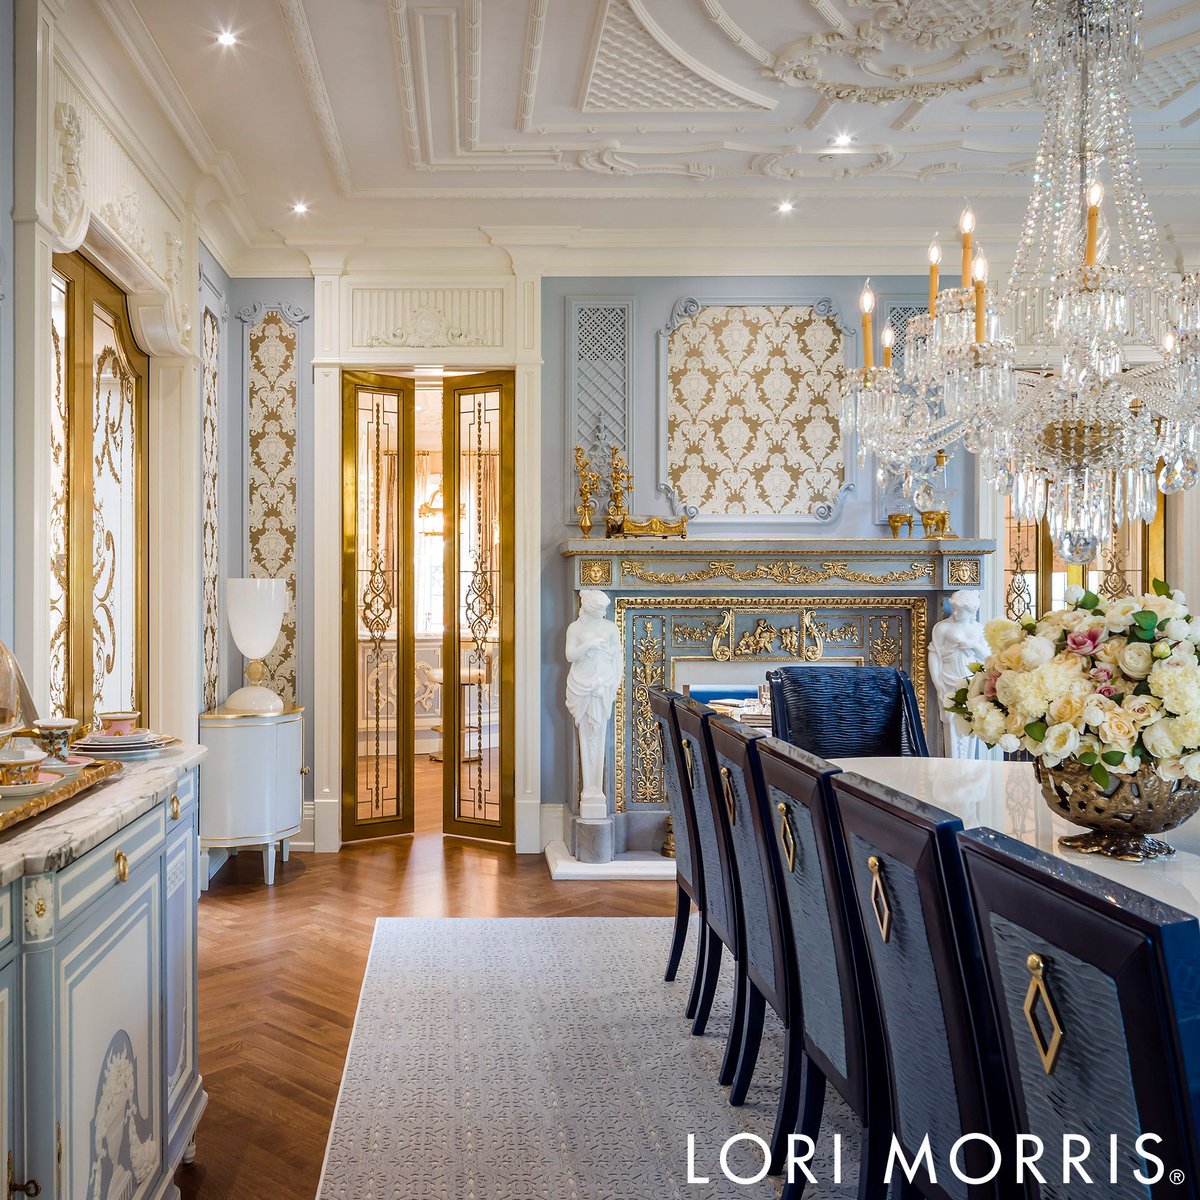 Royal blues ❤️ 
#lorimorris #houseoflmd #luxurydiningroom #diningroom #diningroomreno #interiordesign #interiordecorating #home #architecture #luxuryinteriordecorating #luxuryhousedesign #highendinteriors #homedecorgoals #stylishhomes #roomsbylorimorris #lorimorrisconcierge